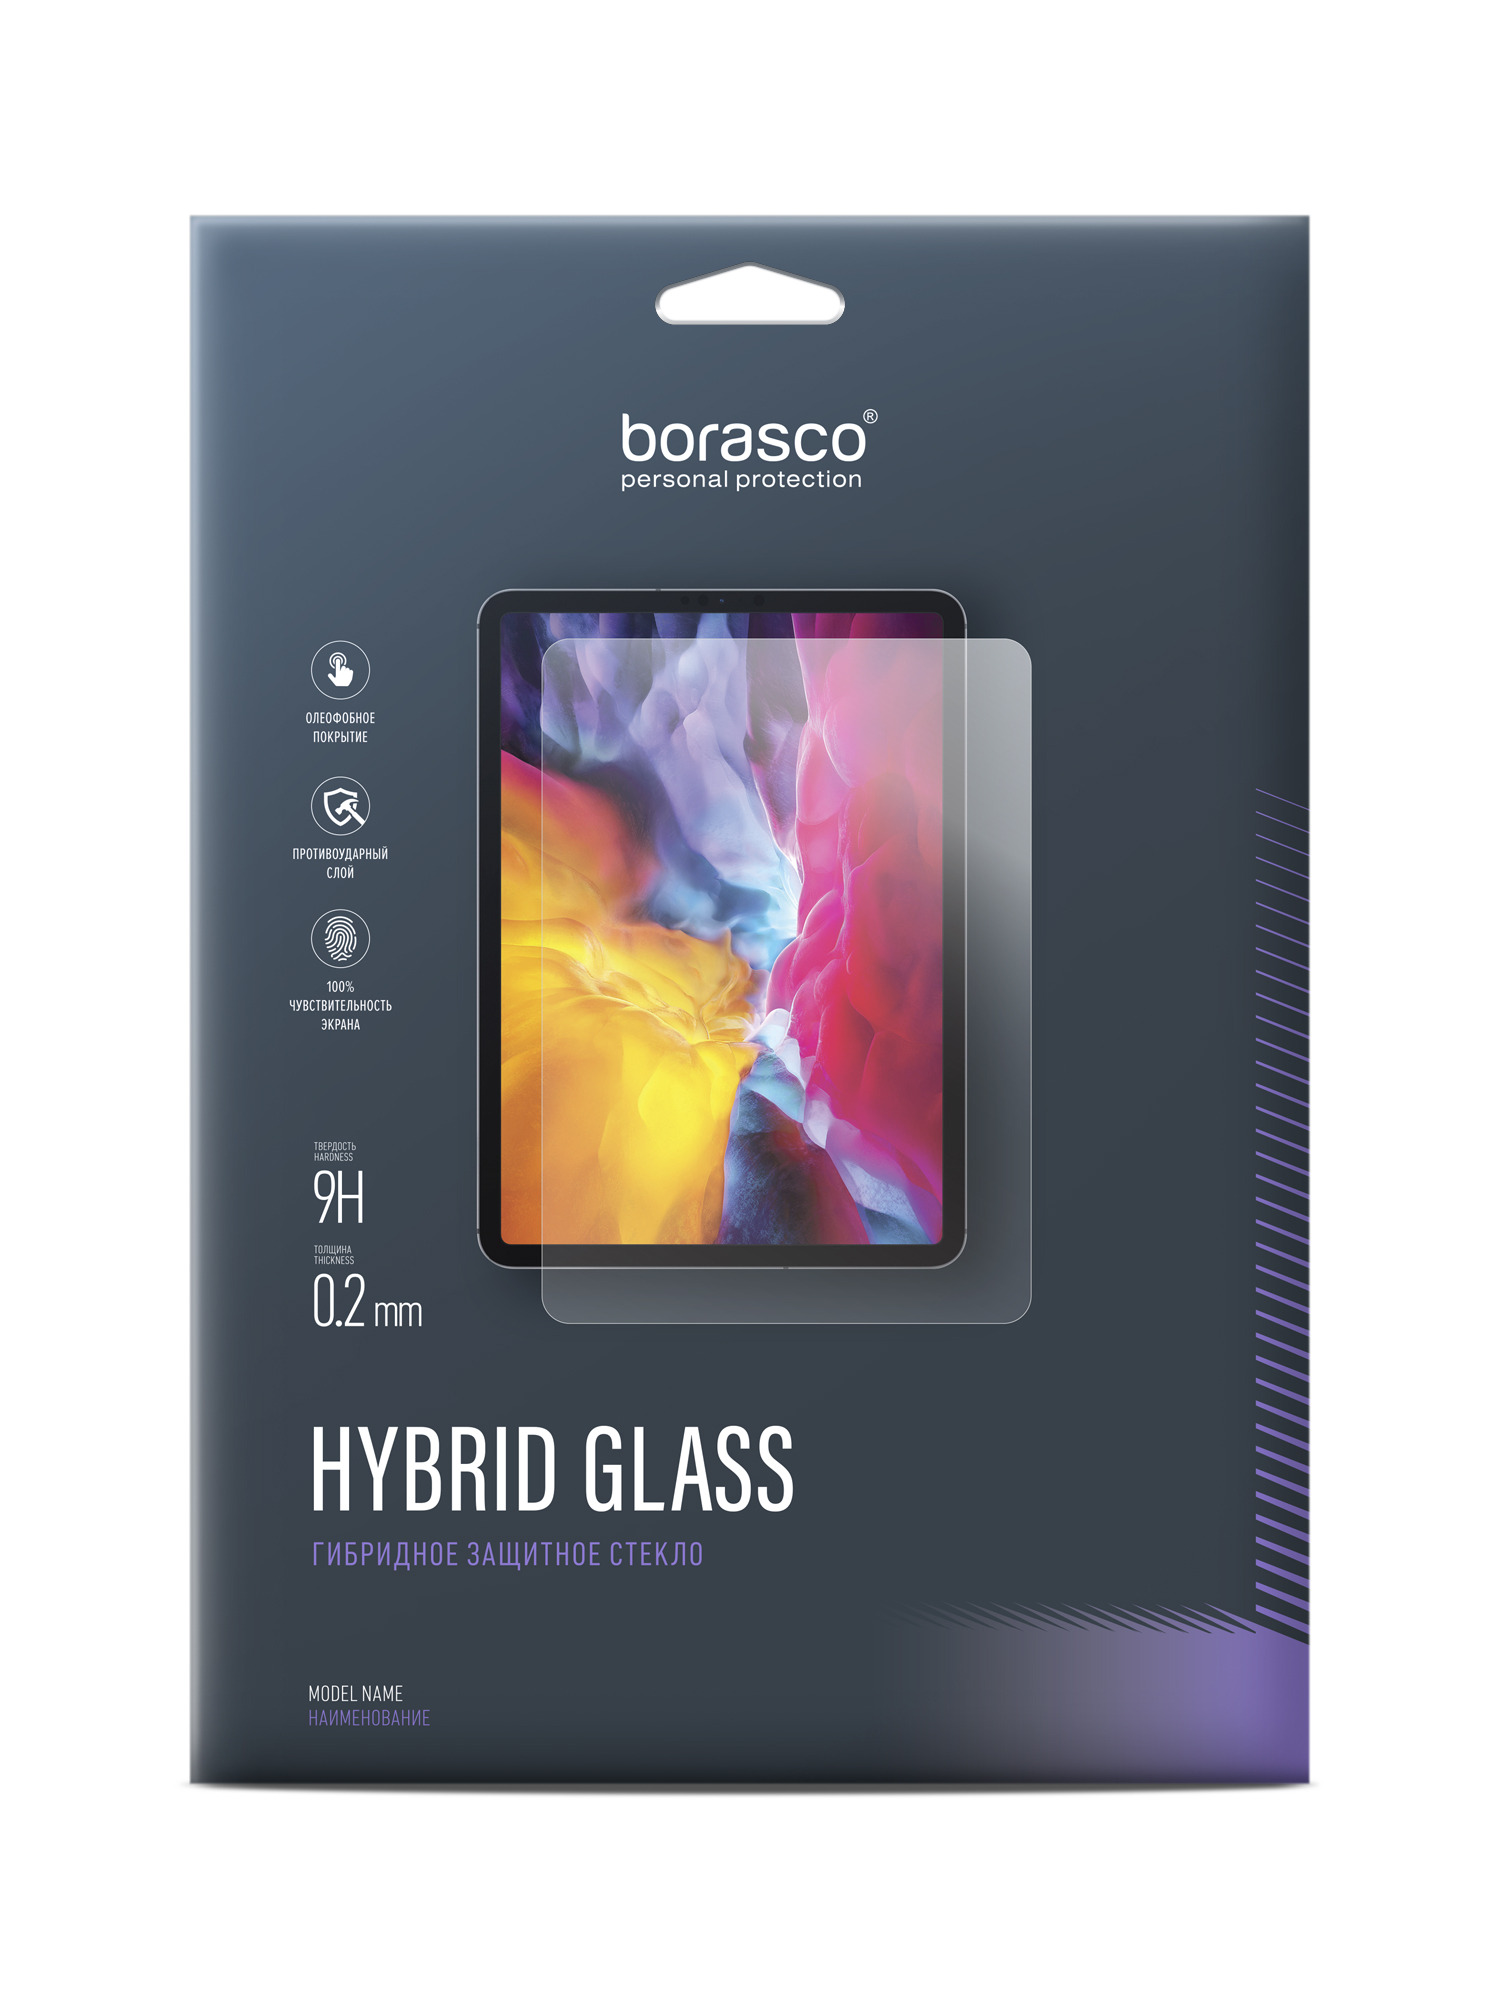 Защитное стекло Hybrid Glass для Samsung Galaxy Tab S7 (SM-T870/ SM-T875) защитное стекло для samsung galaxy tab a 10 5 sm t590 sm t595